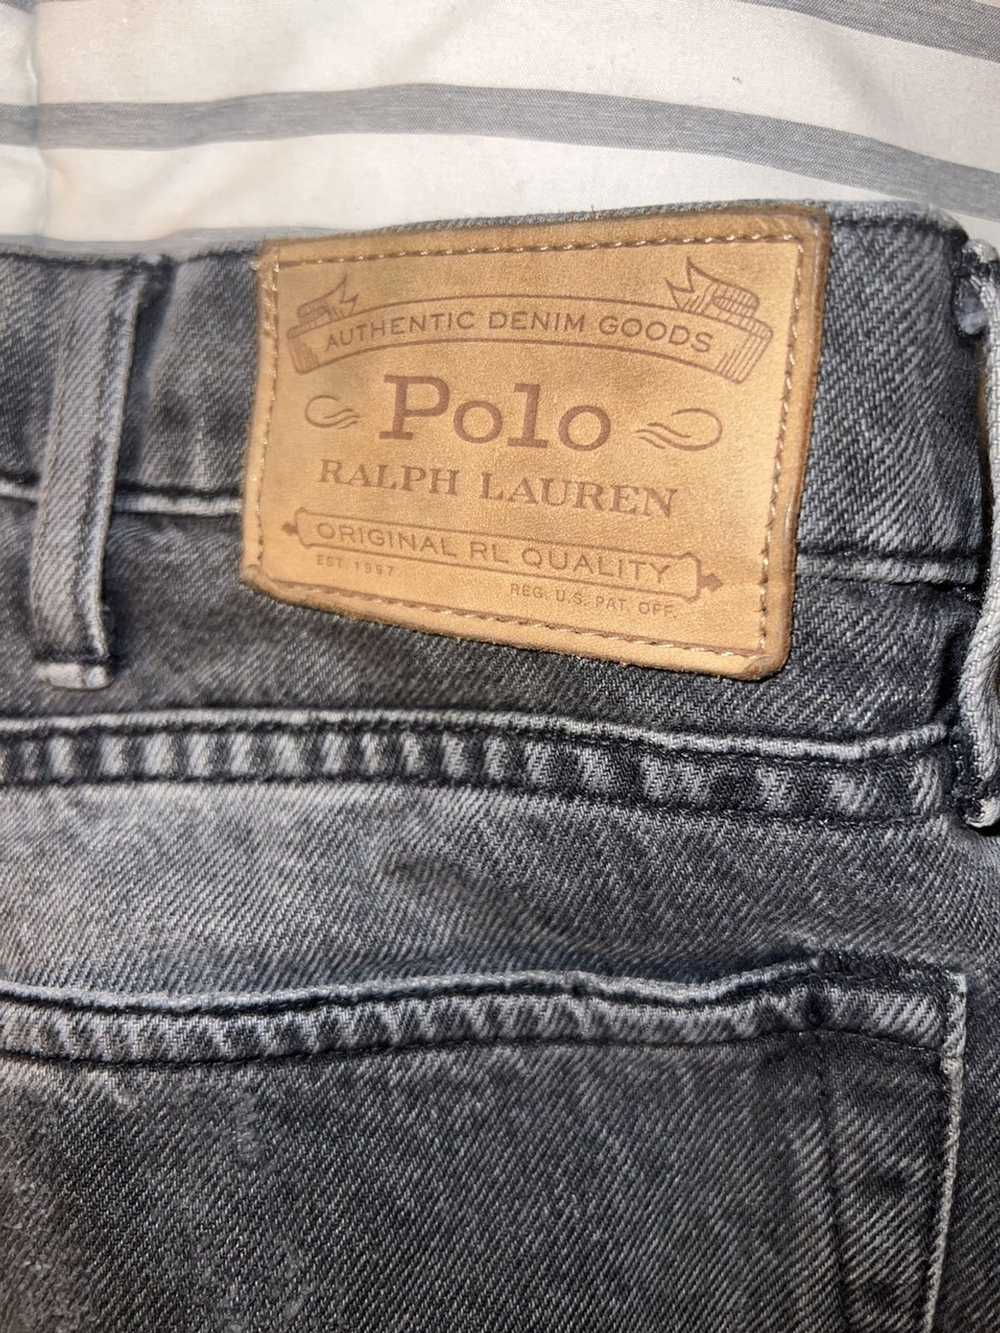 Polo Ralph Lauren Polo Jeans - image 5